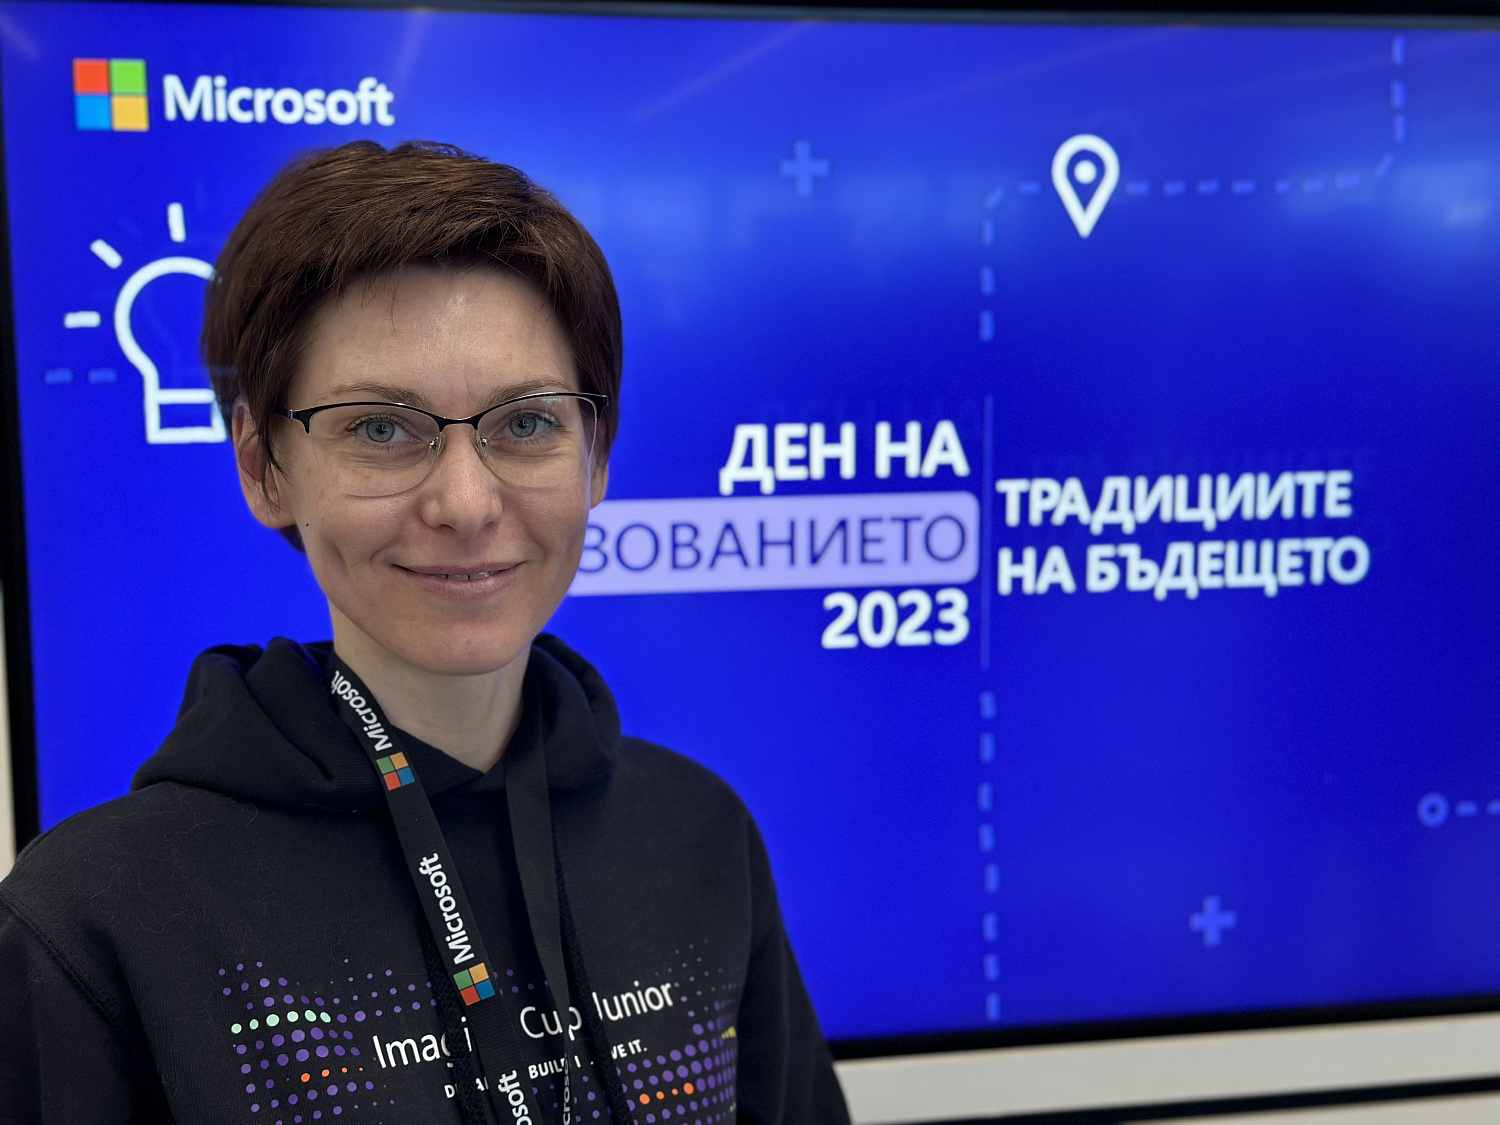 Microsoft Edu Day - Sofia, Bulgaria